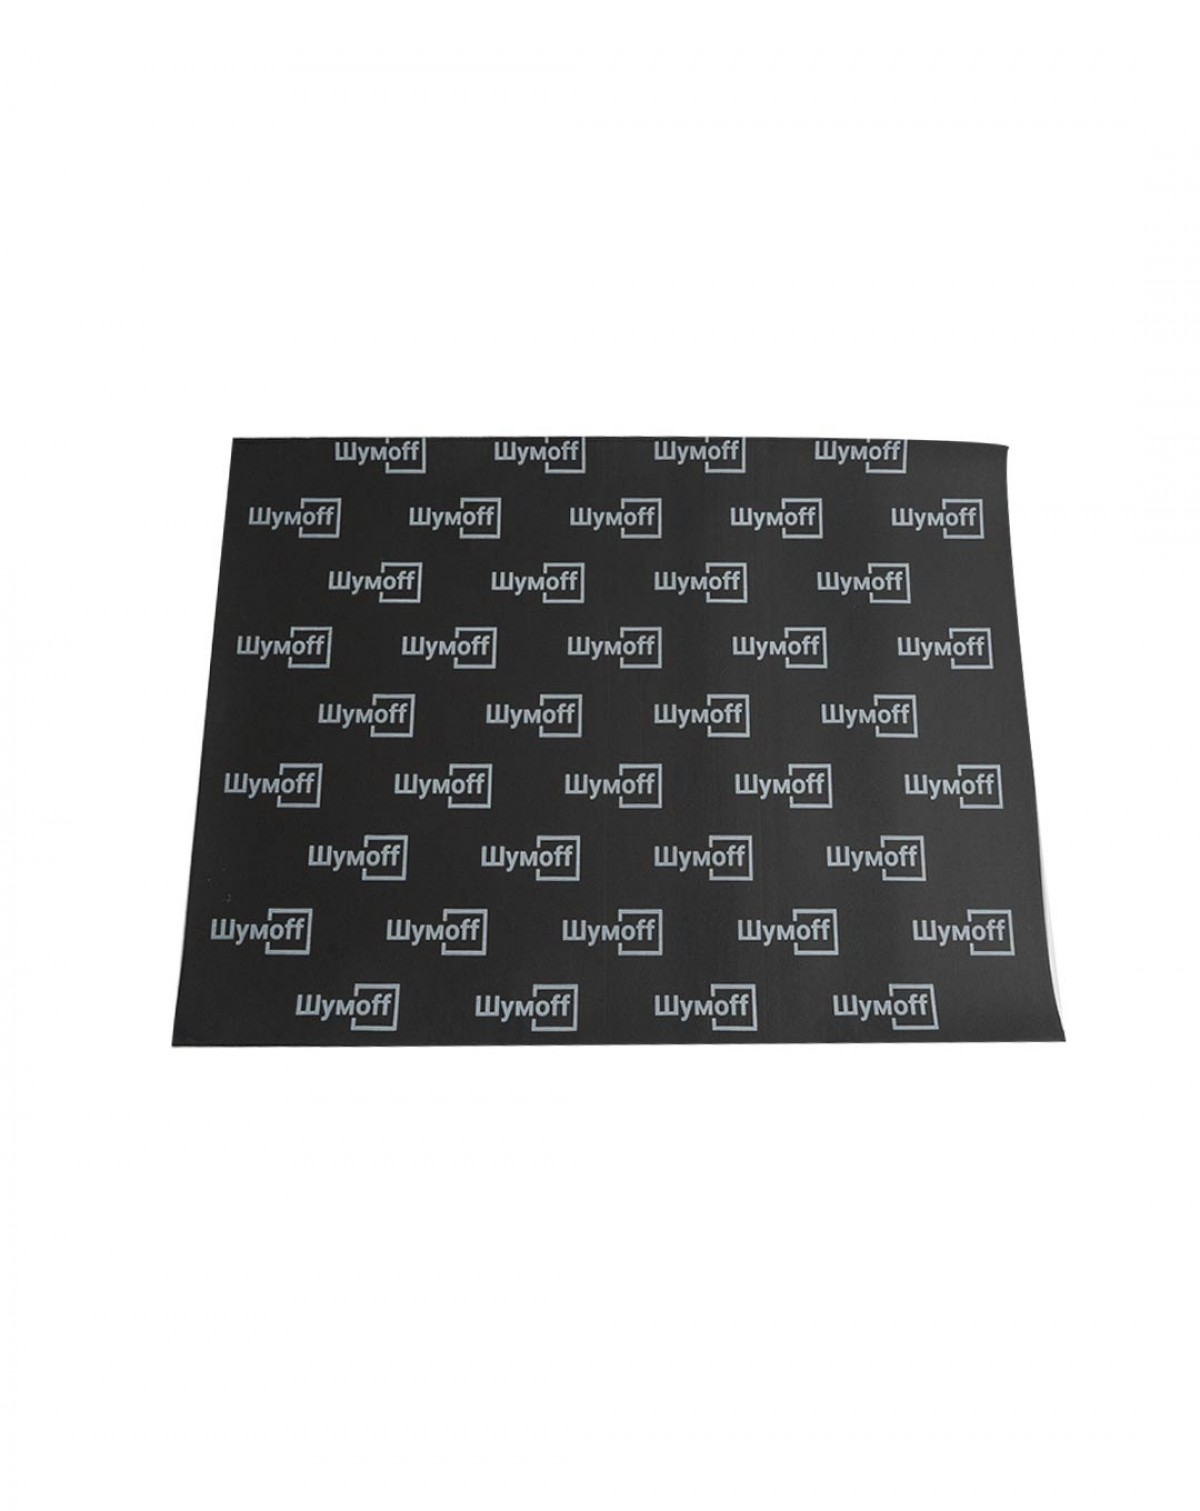 Шумопоглощающий материал для авто Шумофф Комфорт 3 (1 лист) 75х100 см черный, 3 мм